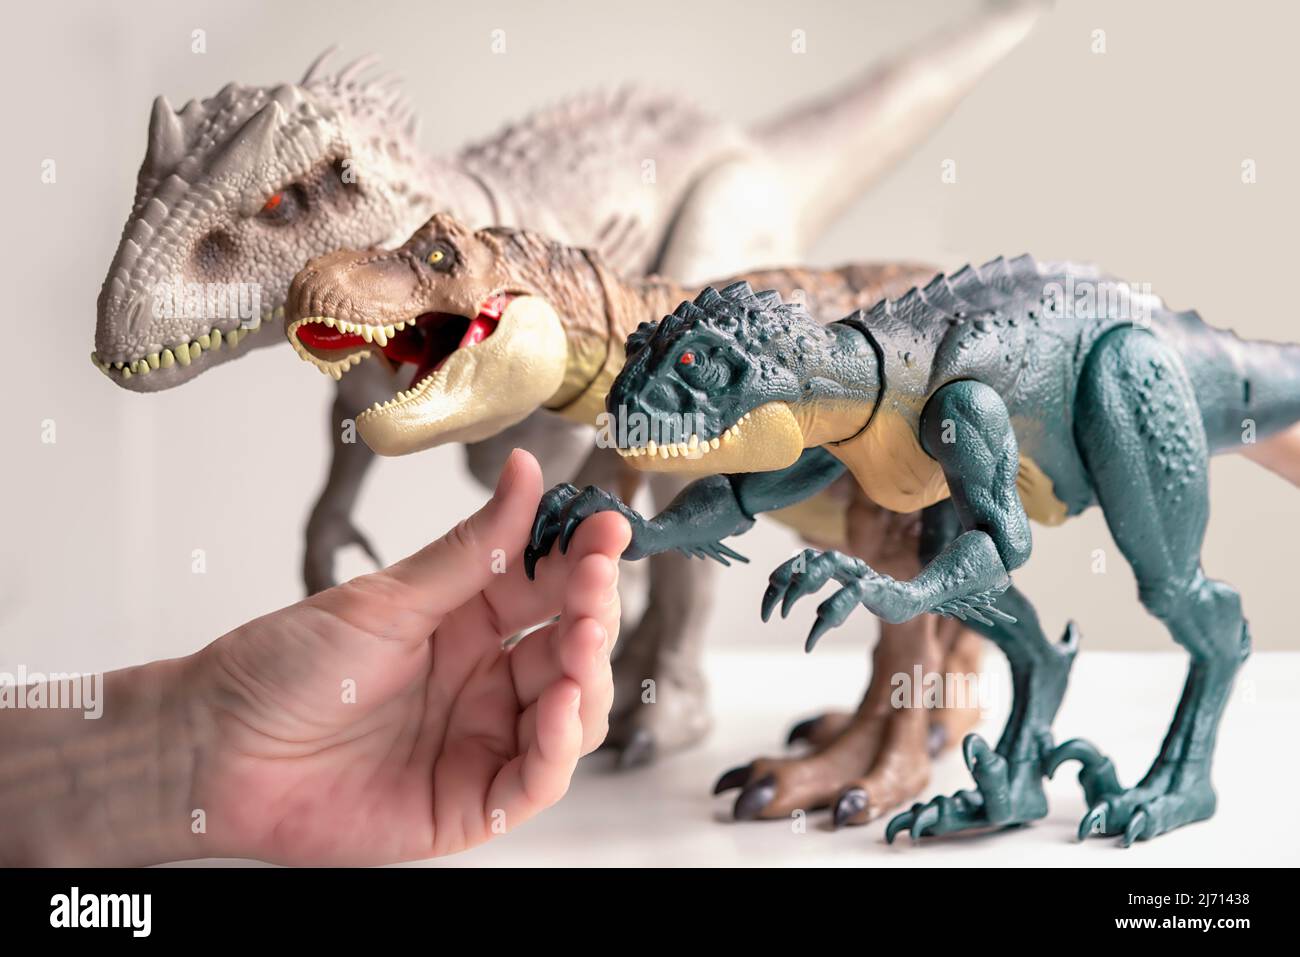 Handshake with dinosaurs. Hand touches dinosaur toys. Stock Photo